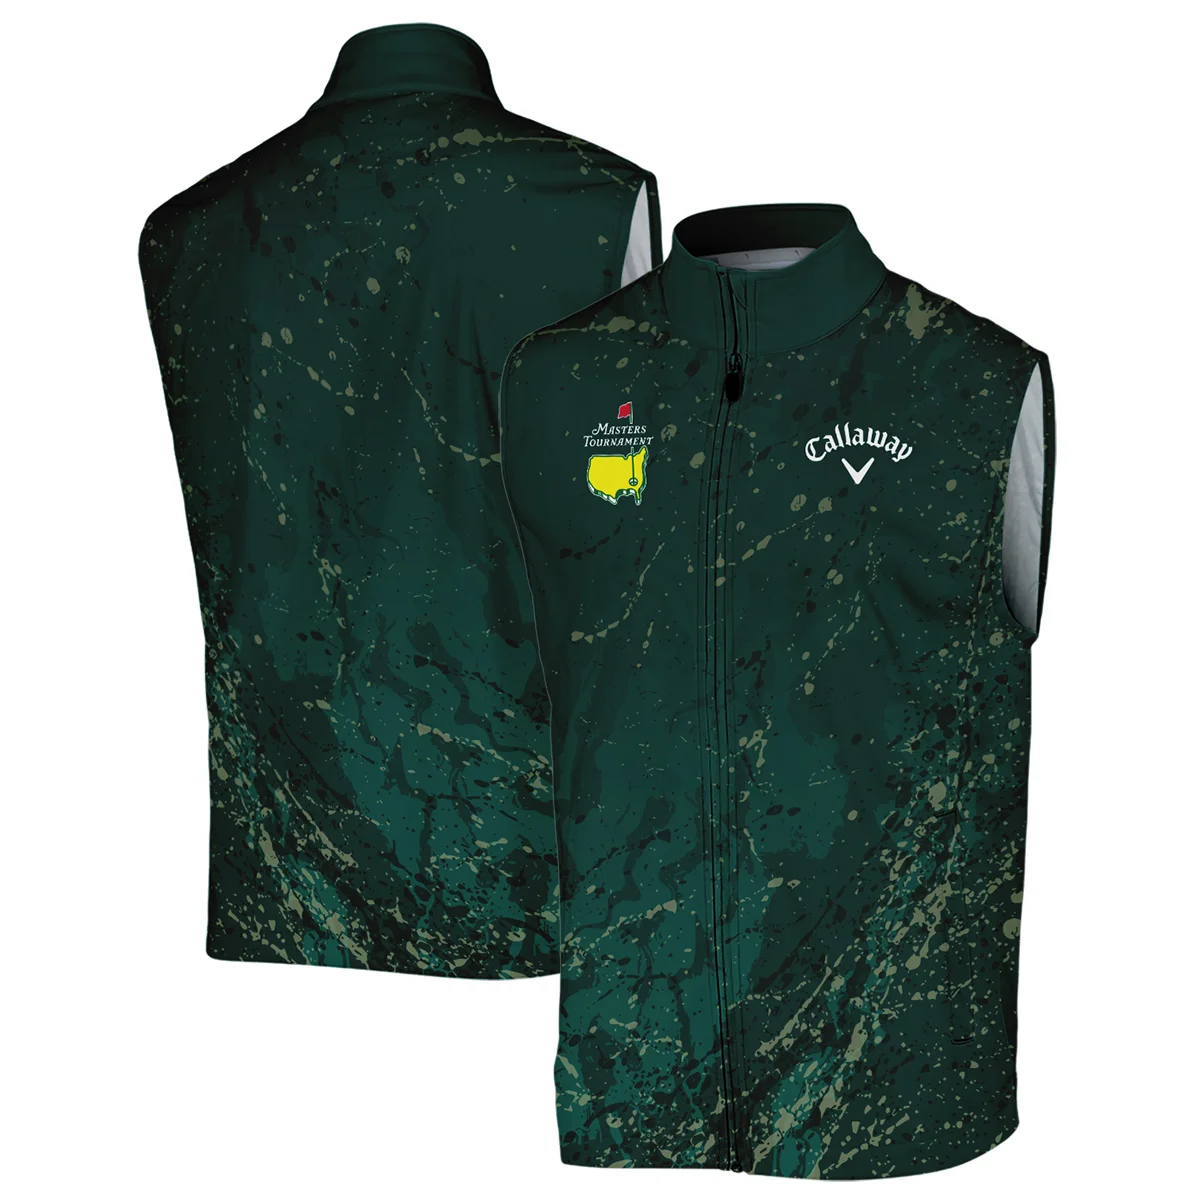 Old Cracked Texture With Gold Splash Paint Masters Tournament Callaway Sleeveless Jacket Style Classic Sleeveless Jacket